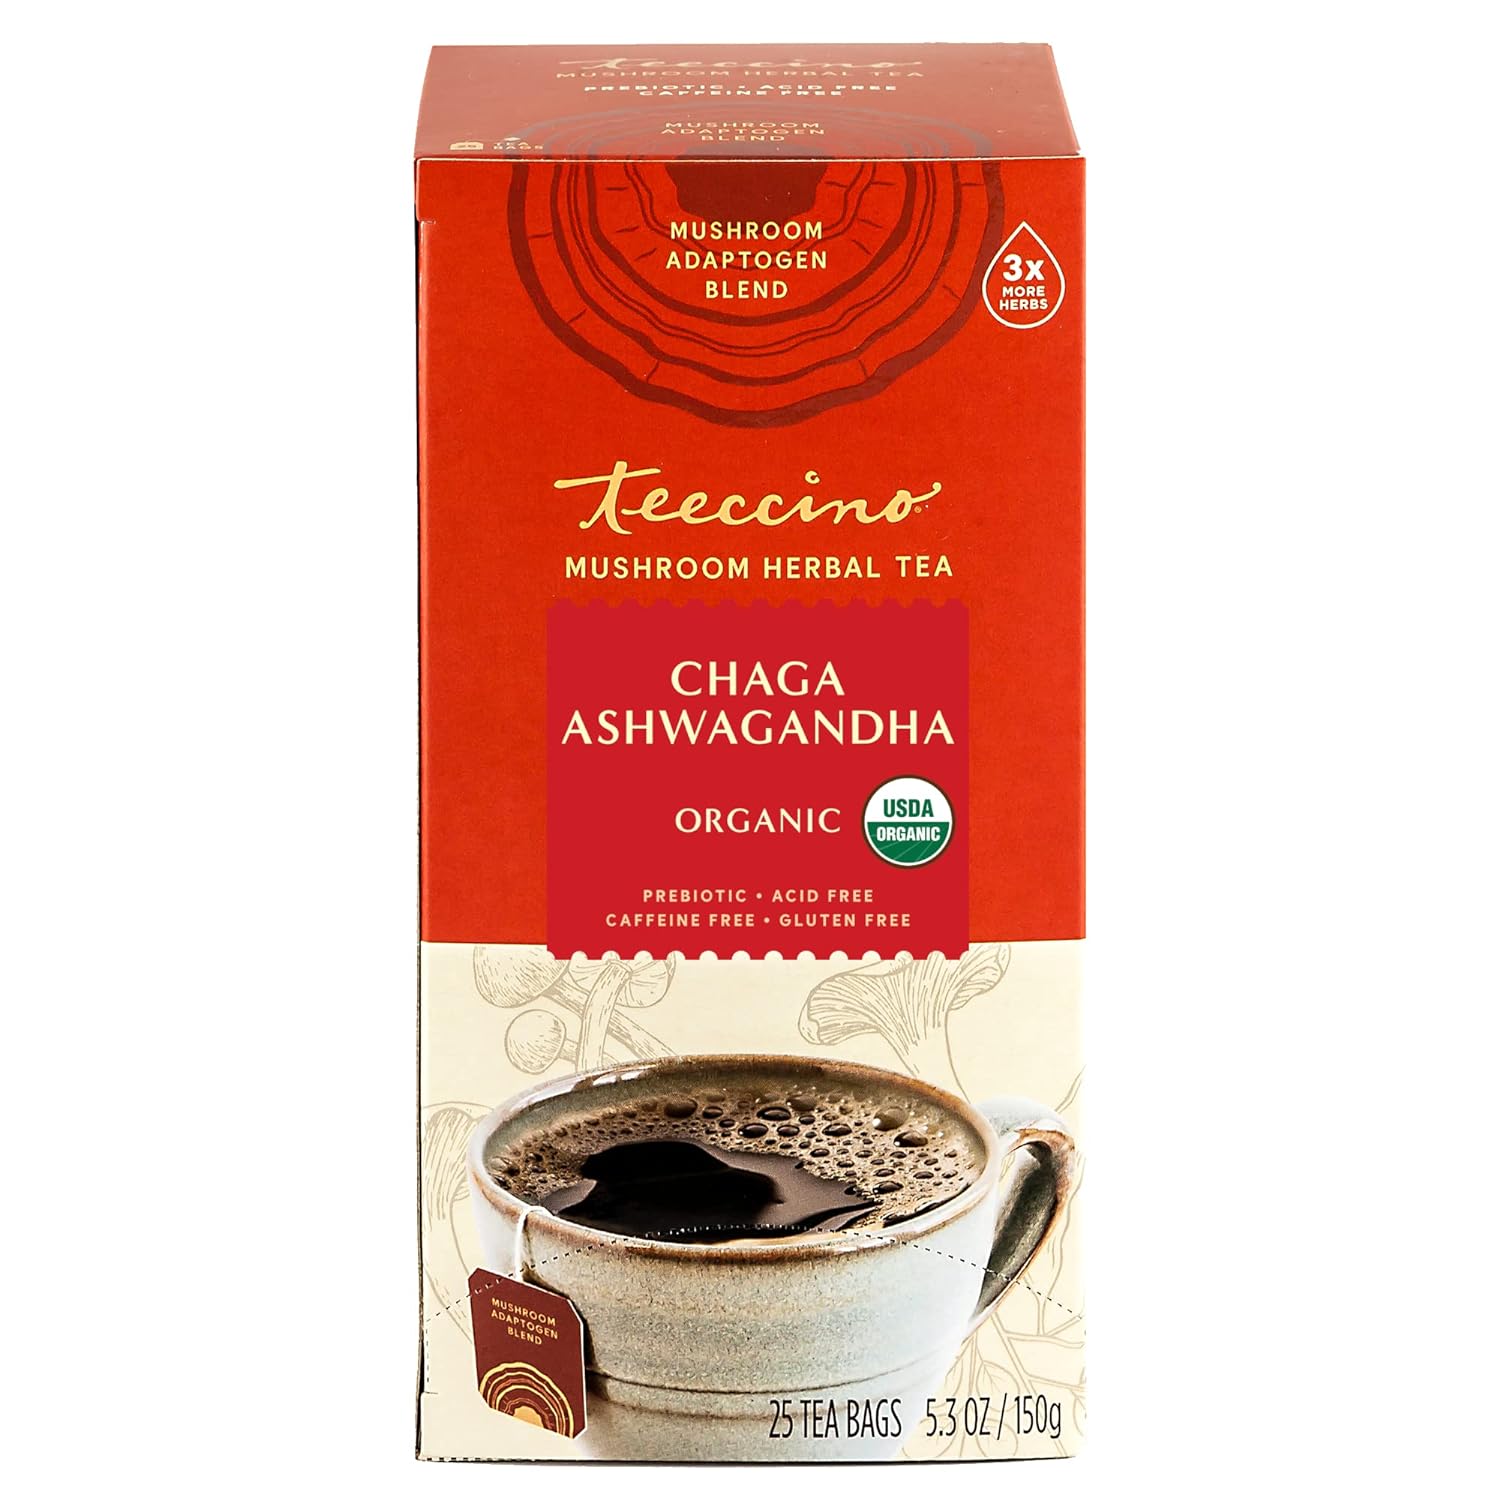 Teeccino Chaga Ashwagandha Tea - Butterscotch Cream - Organic Mushroom Adaptogenic Herbal Tea, 3x More Herbs than Regular Tea Bags, Prebiotic, Caffeine Free, Gluten Free - 25 Tea Bags : Health & Household